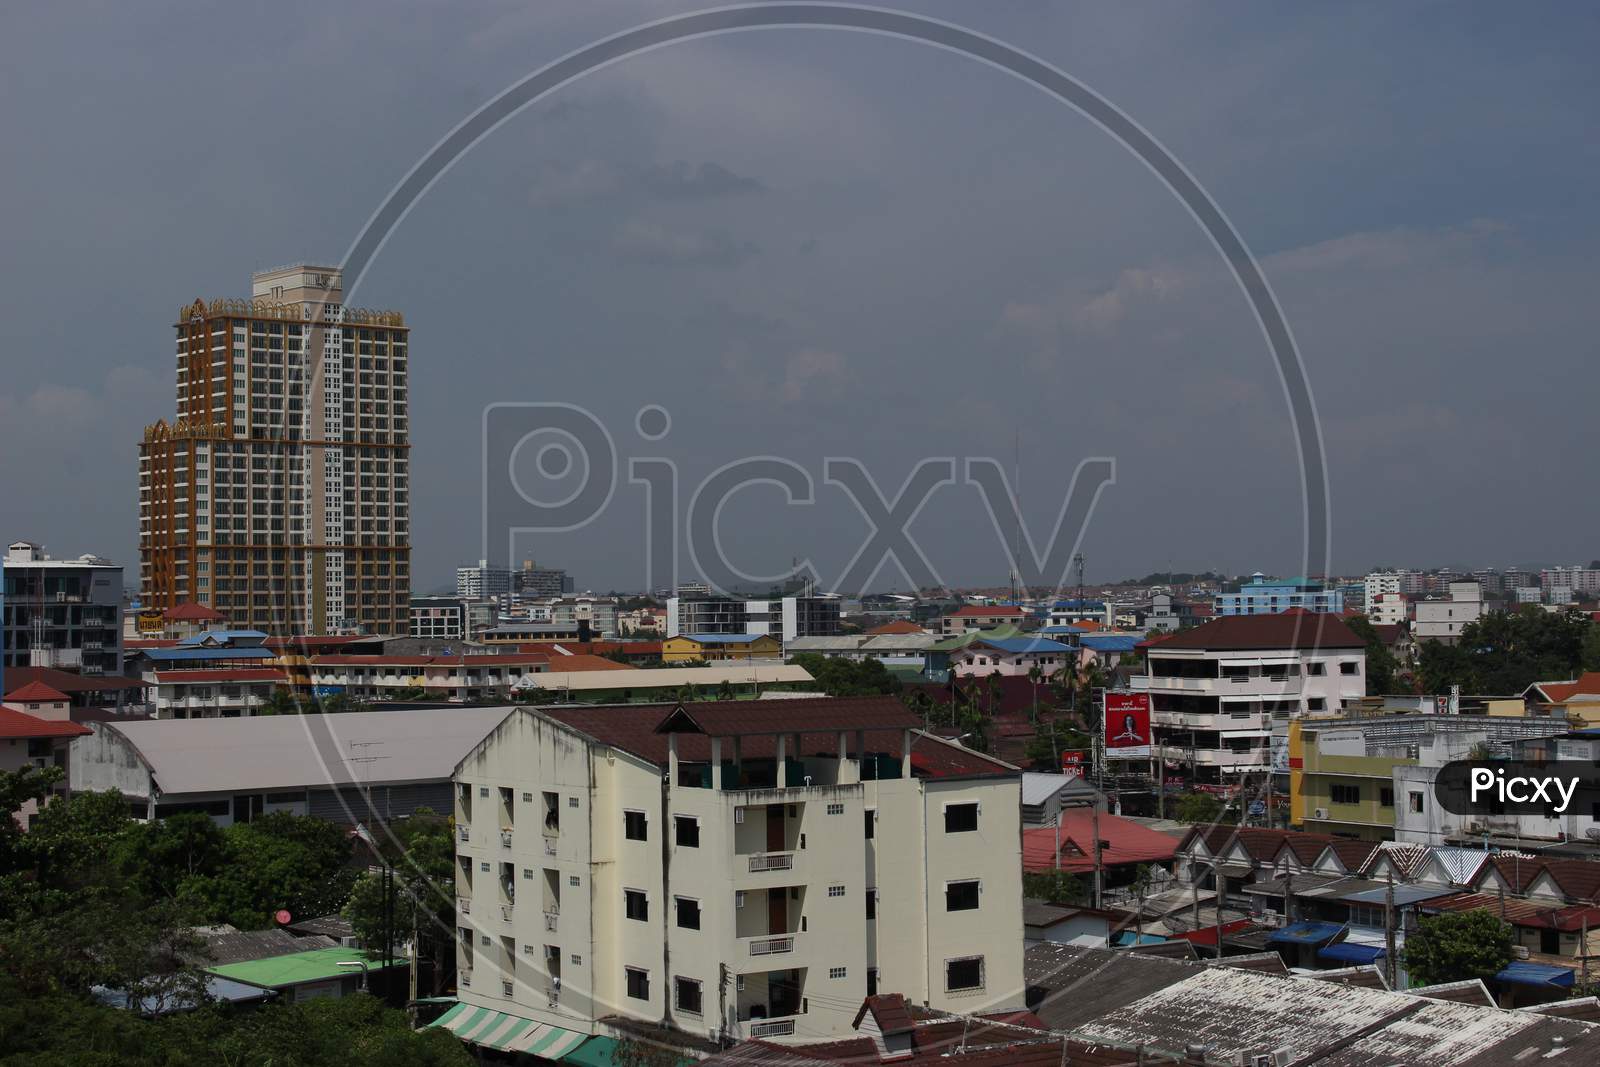 Pattaya city view from Hotel window